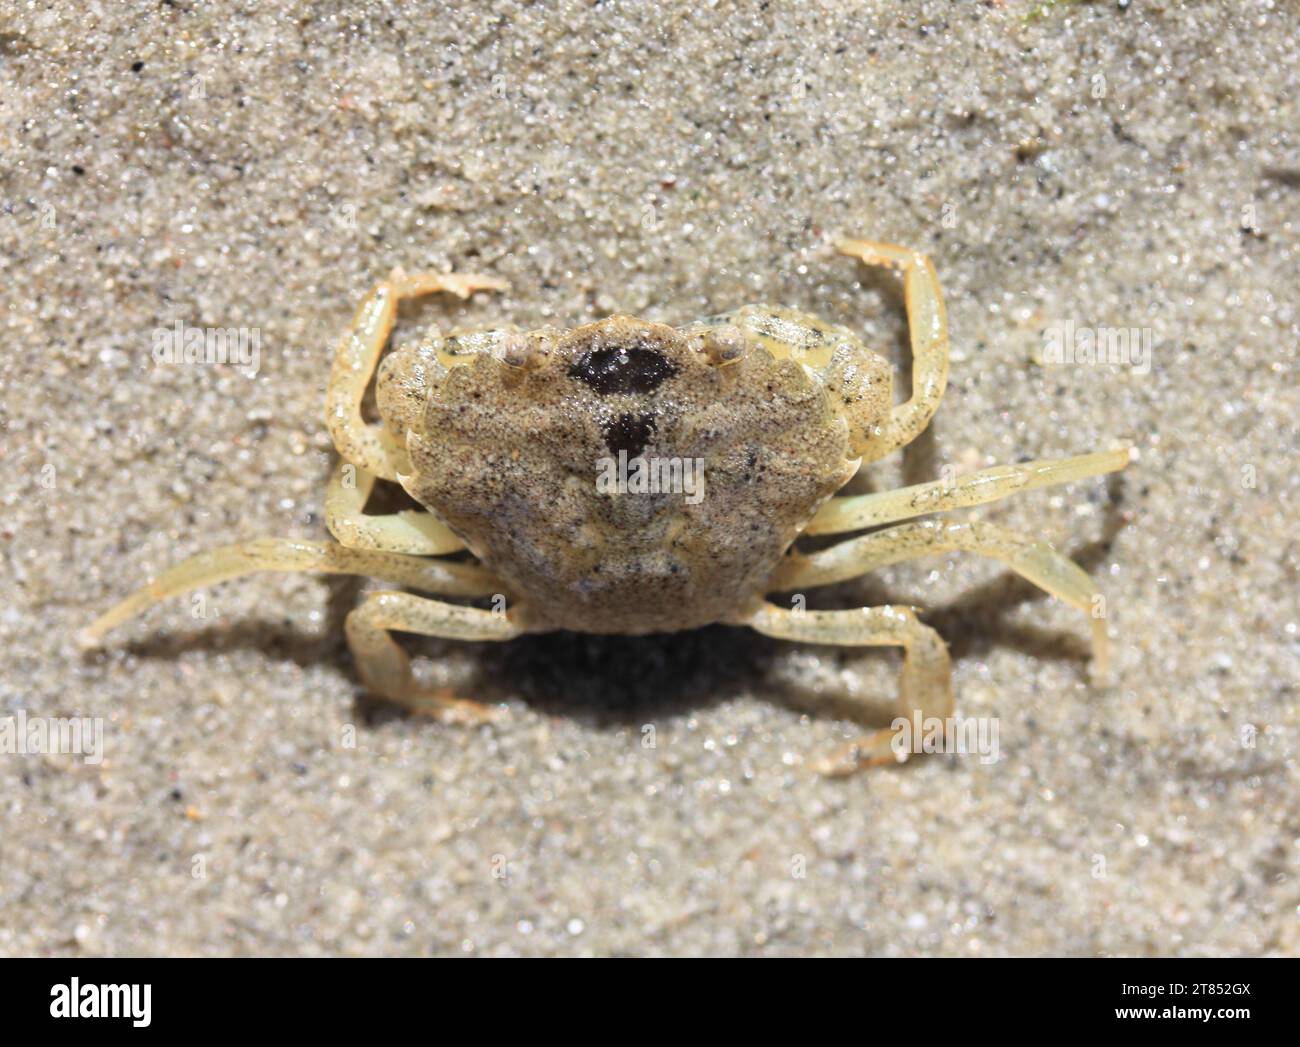 a close-up of a little beach crab (Carcinus maenas) Stock Photo